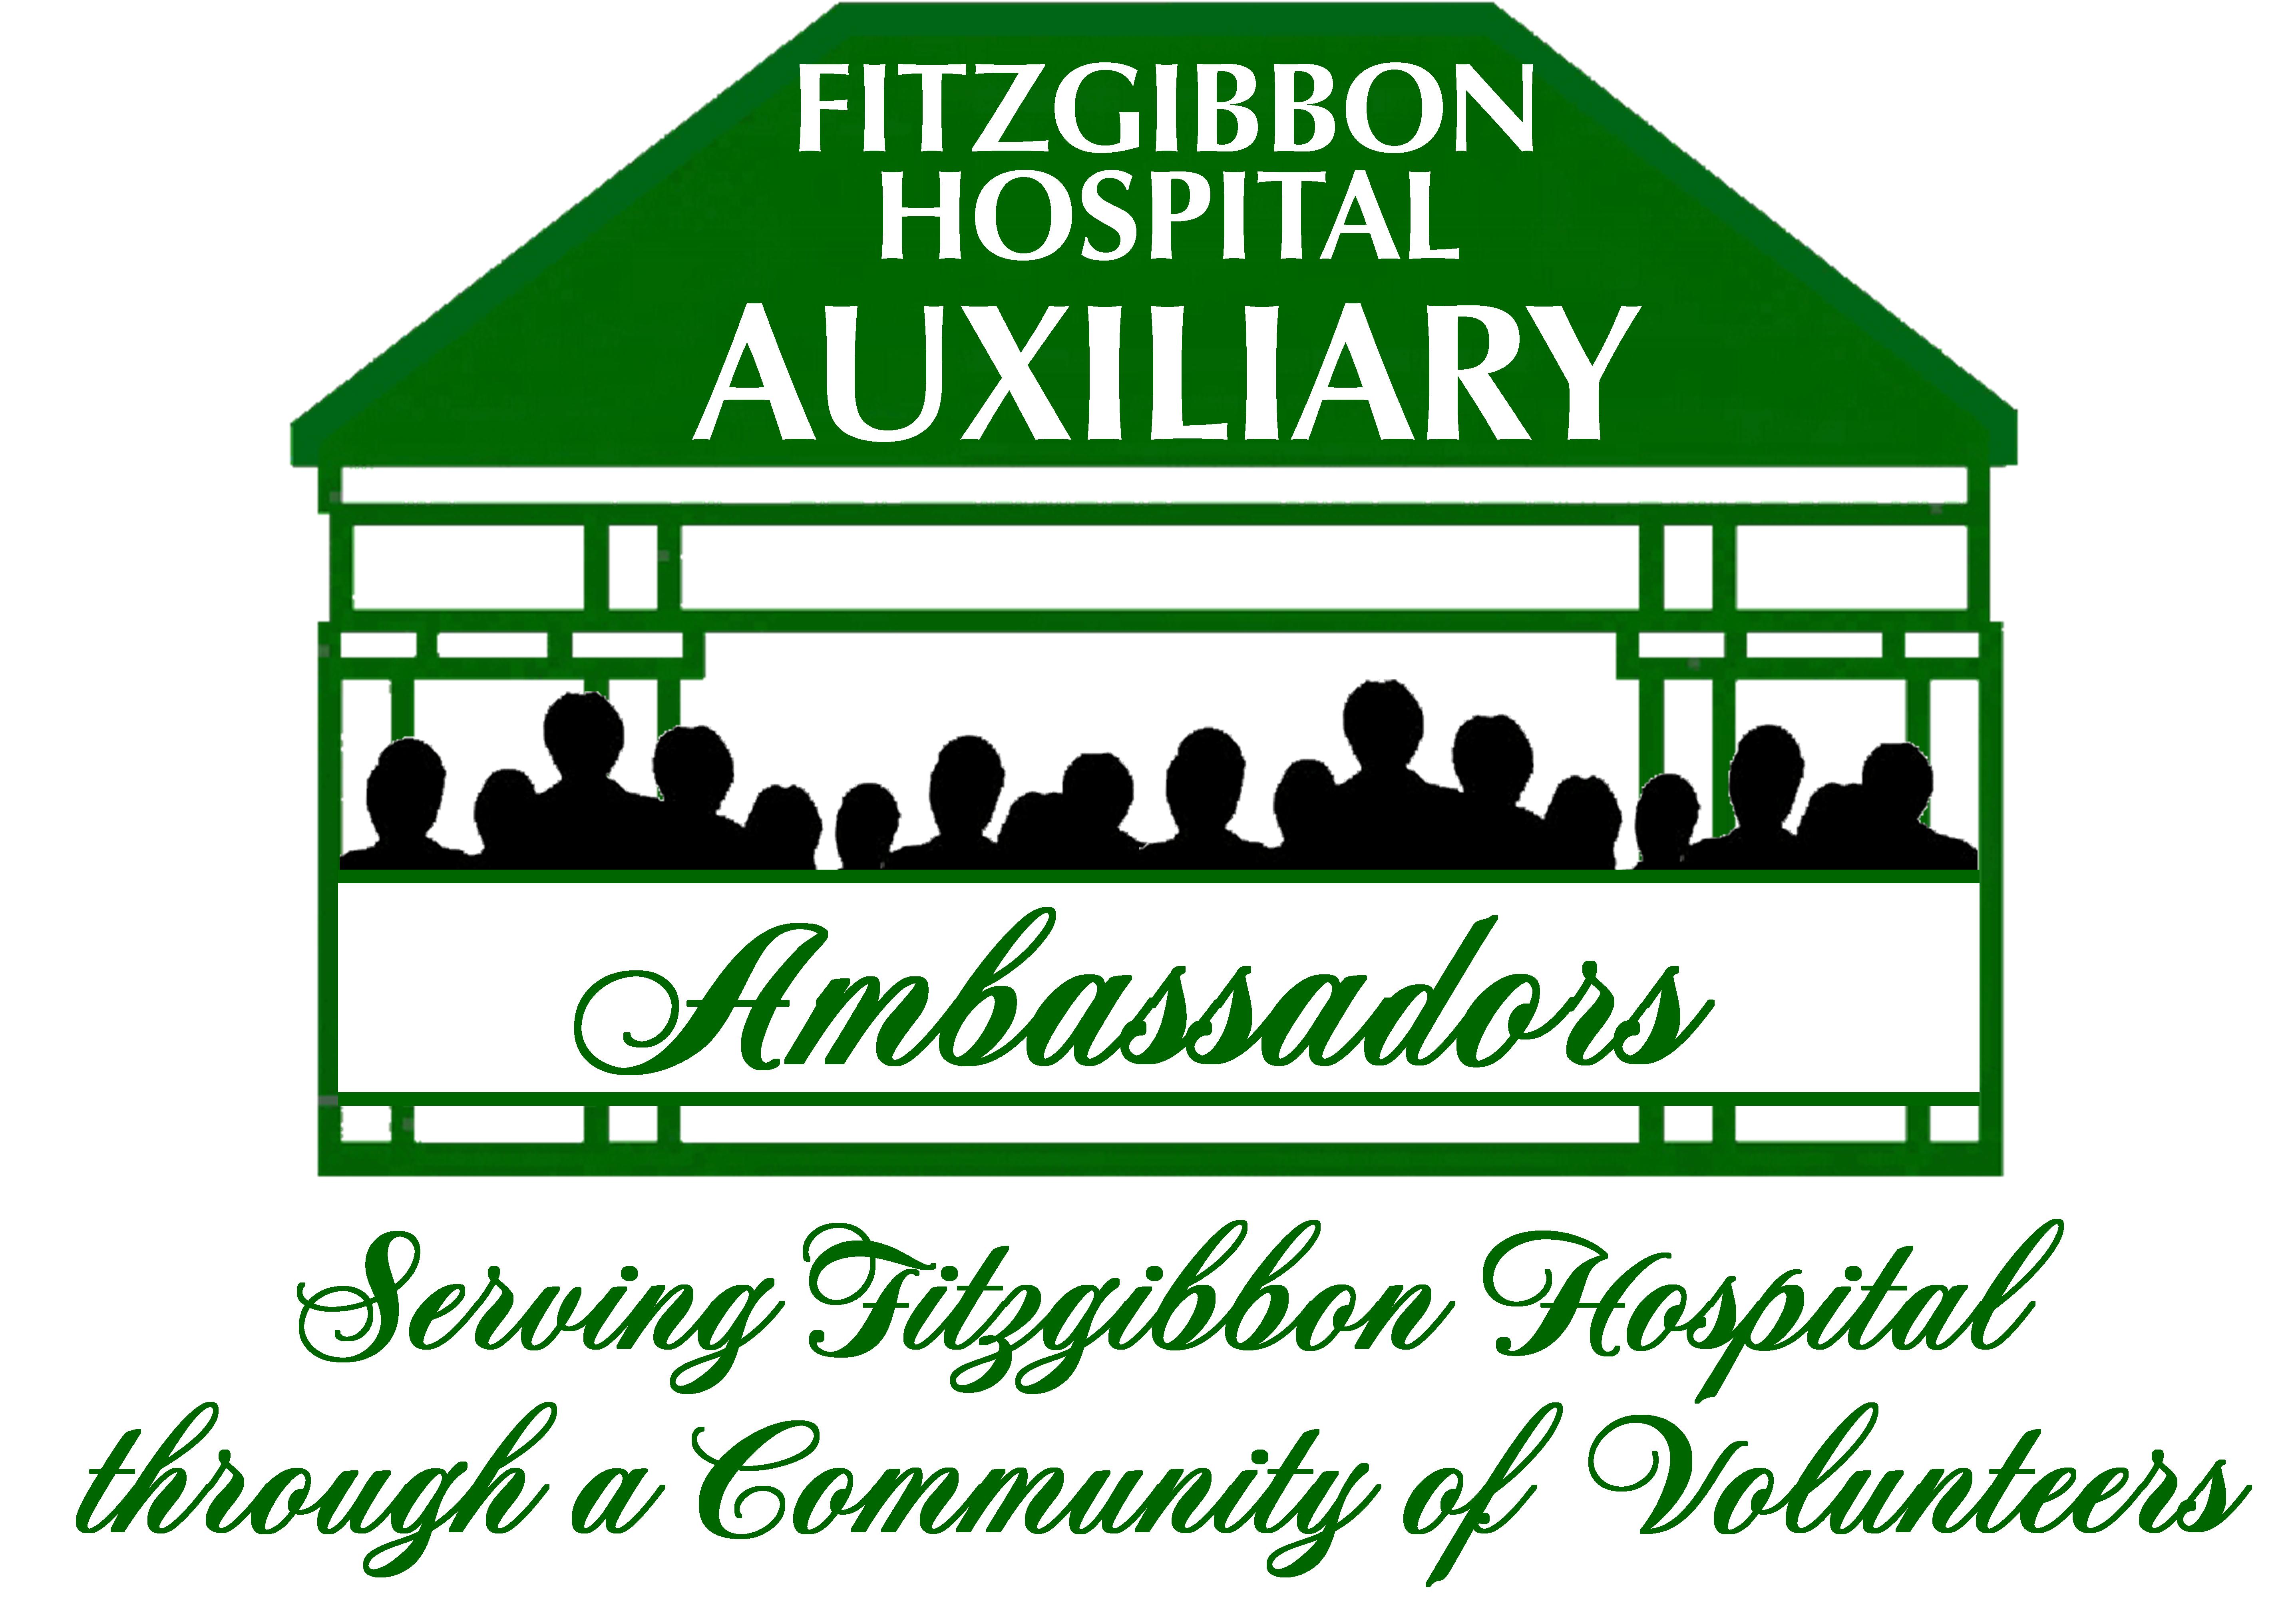 Fitzgibbon Hospital Auxiliary Ambassadors - Serving Fitzgibbon Hospital through a Community of Volunteers